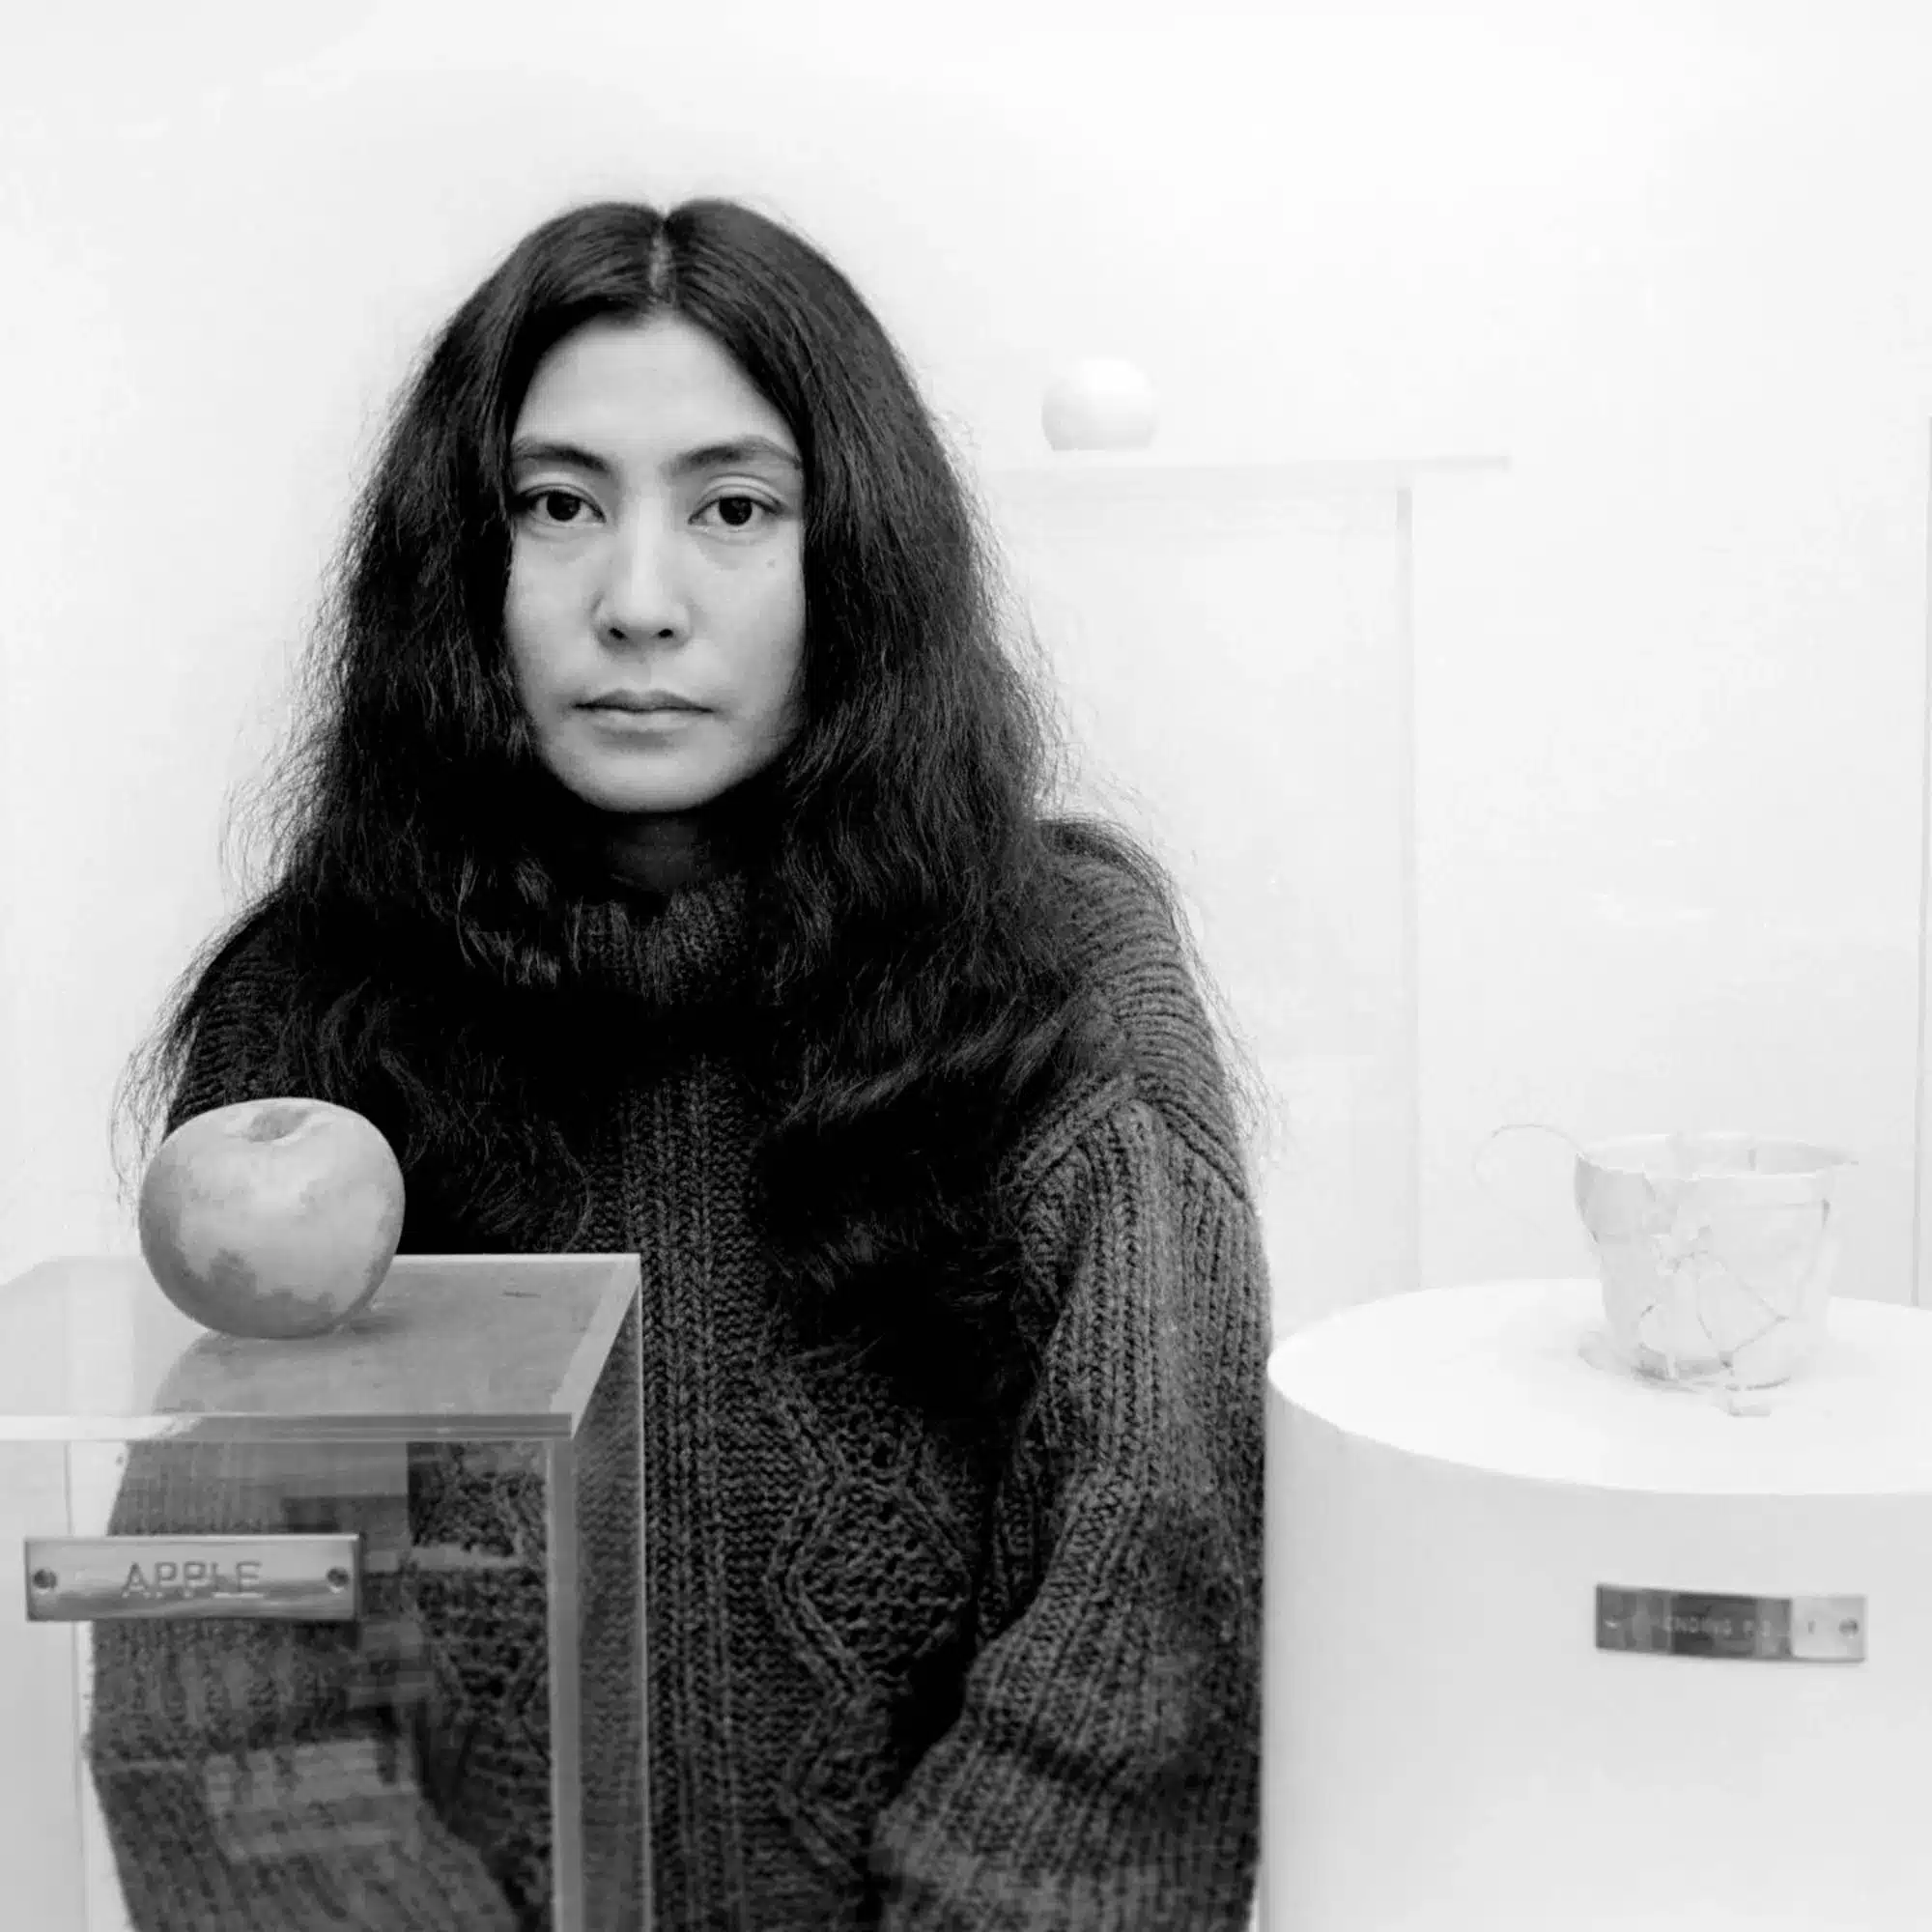 Yoko Ono a great artist!